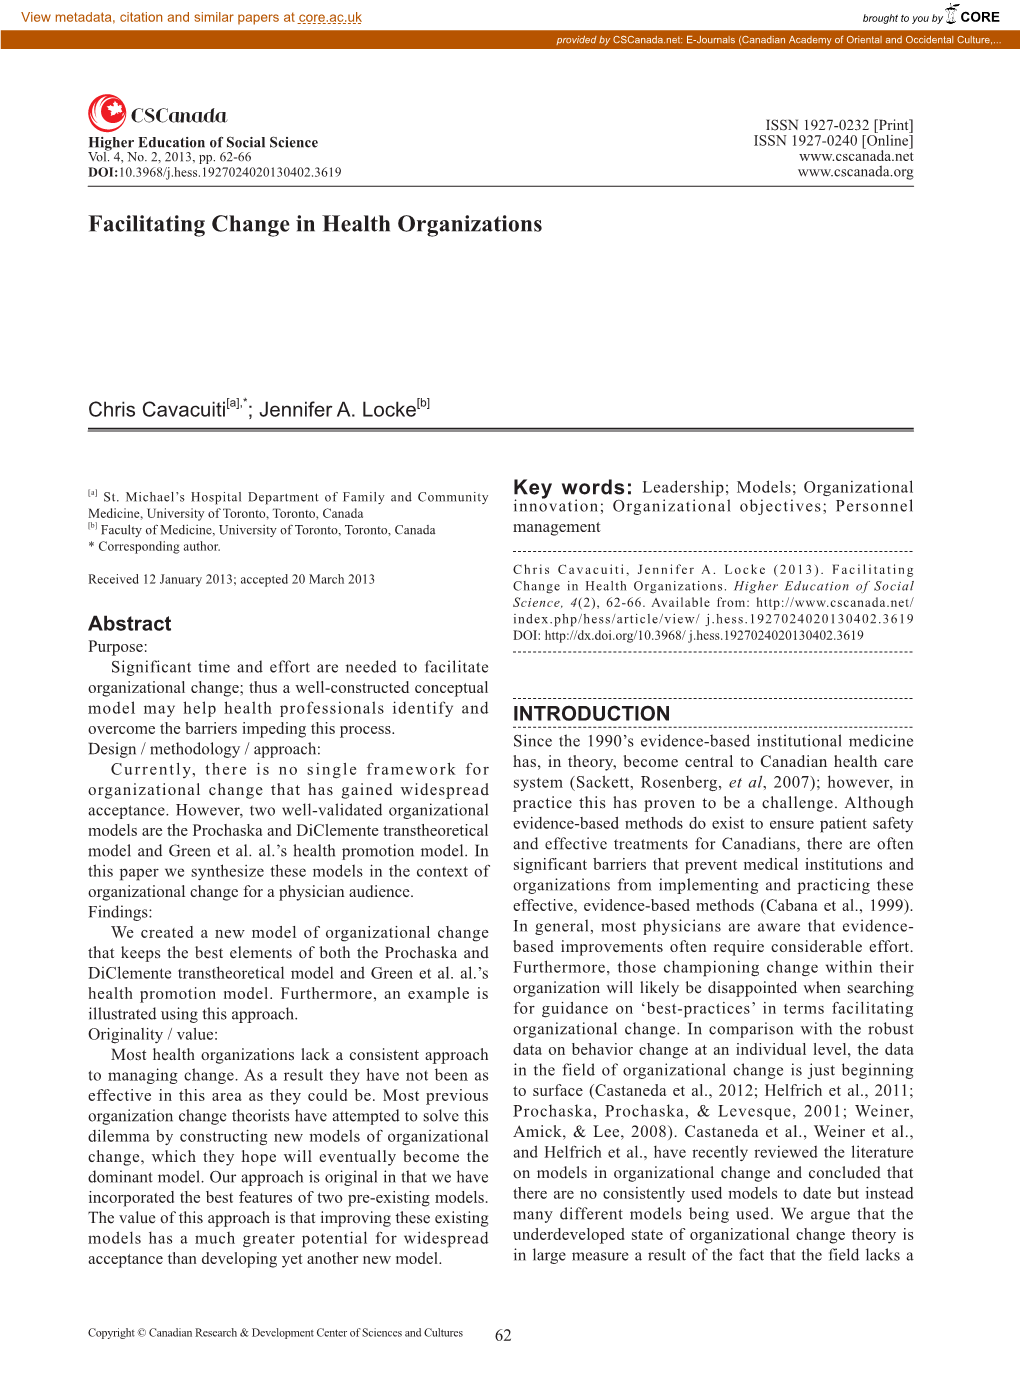 Facilitating Change in Health Organizations